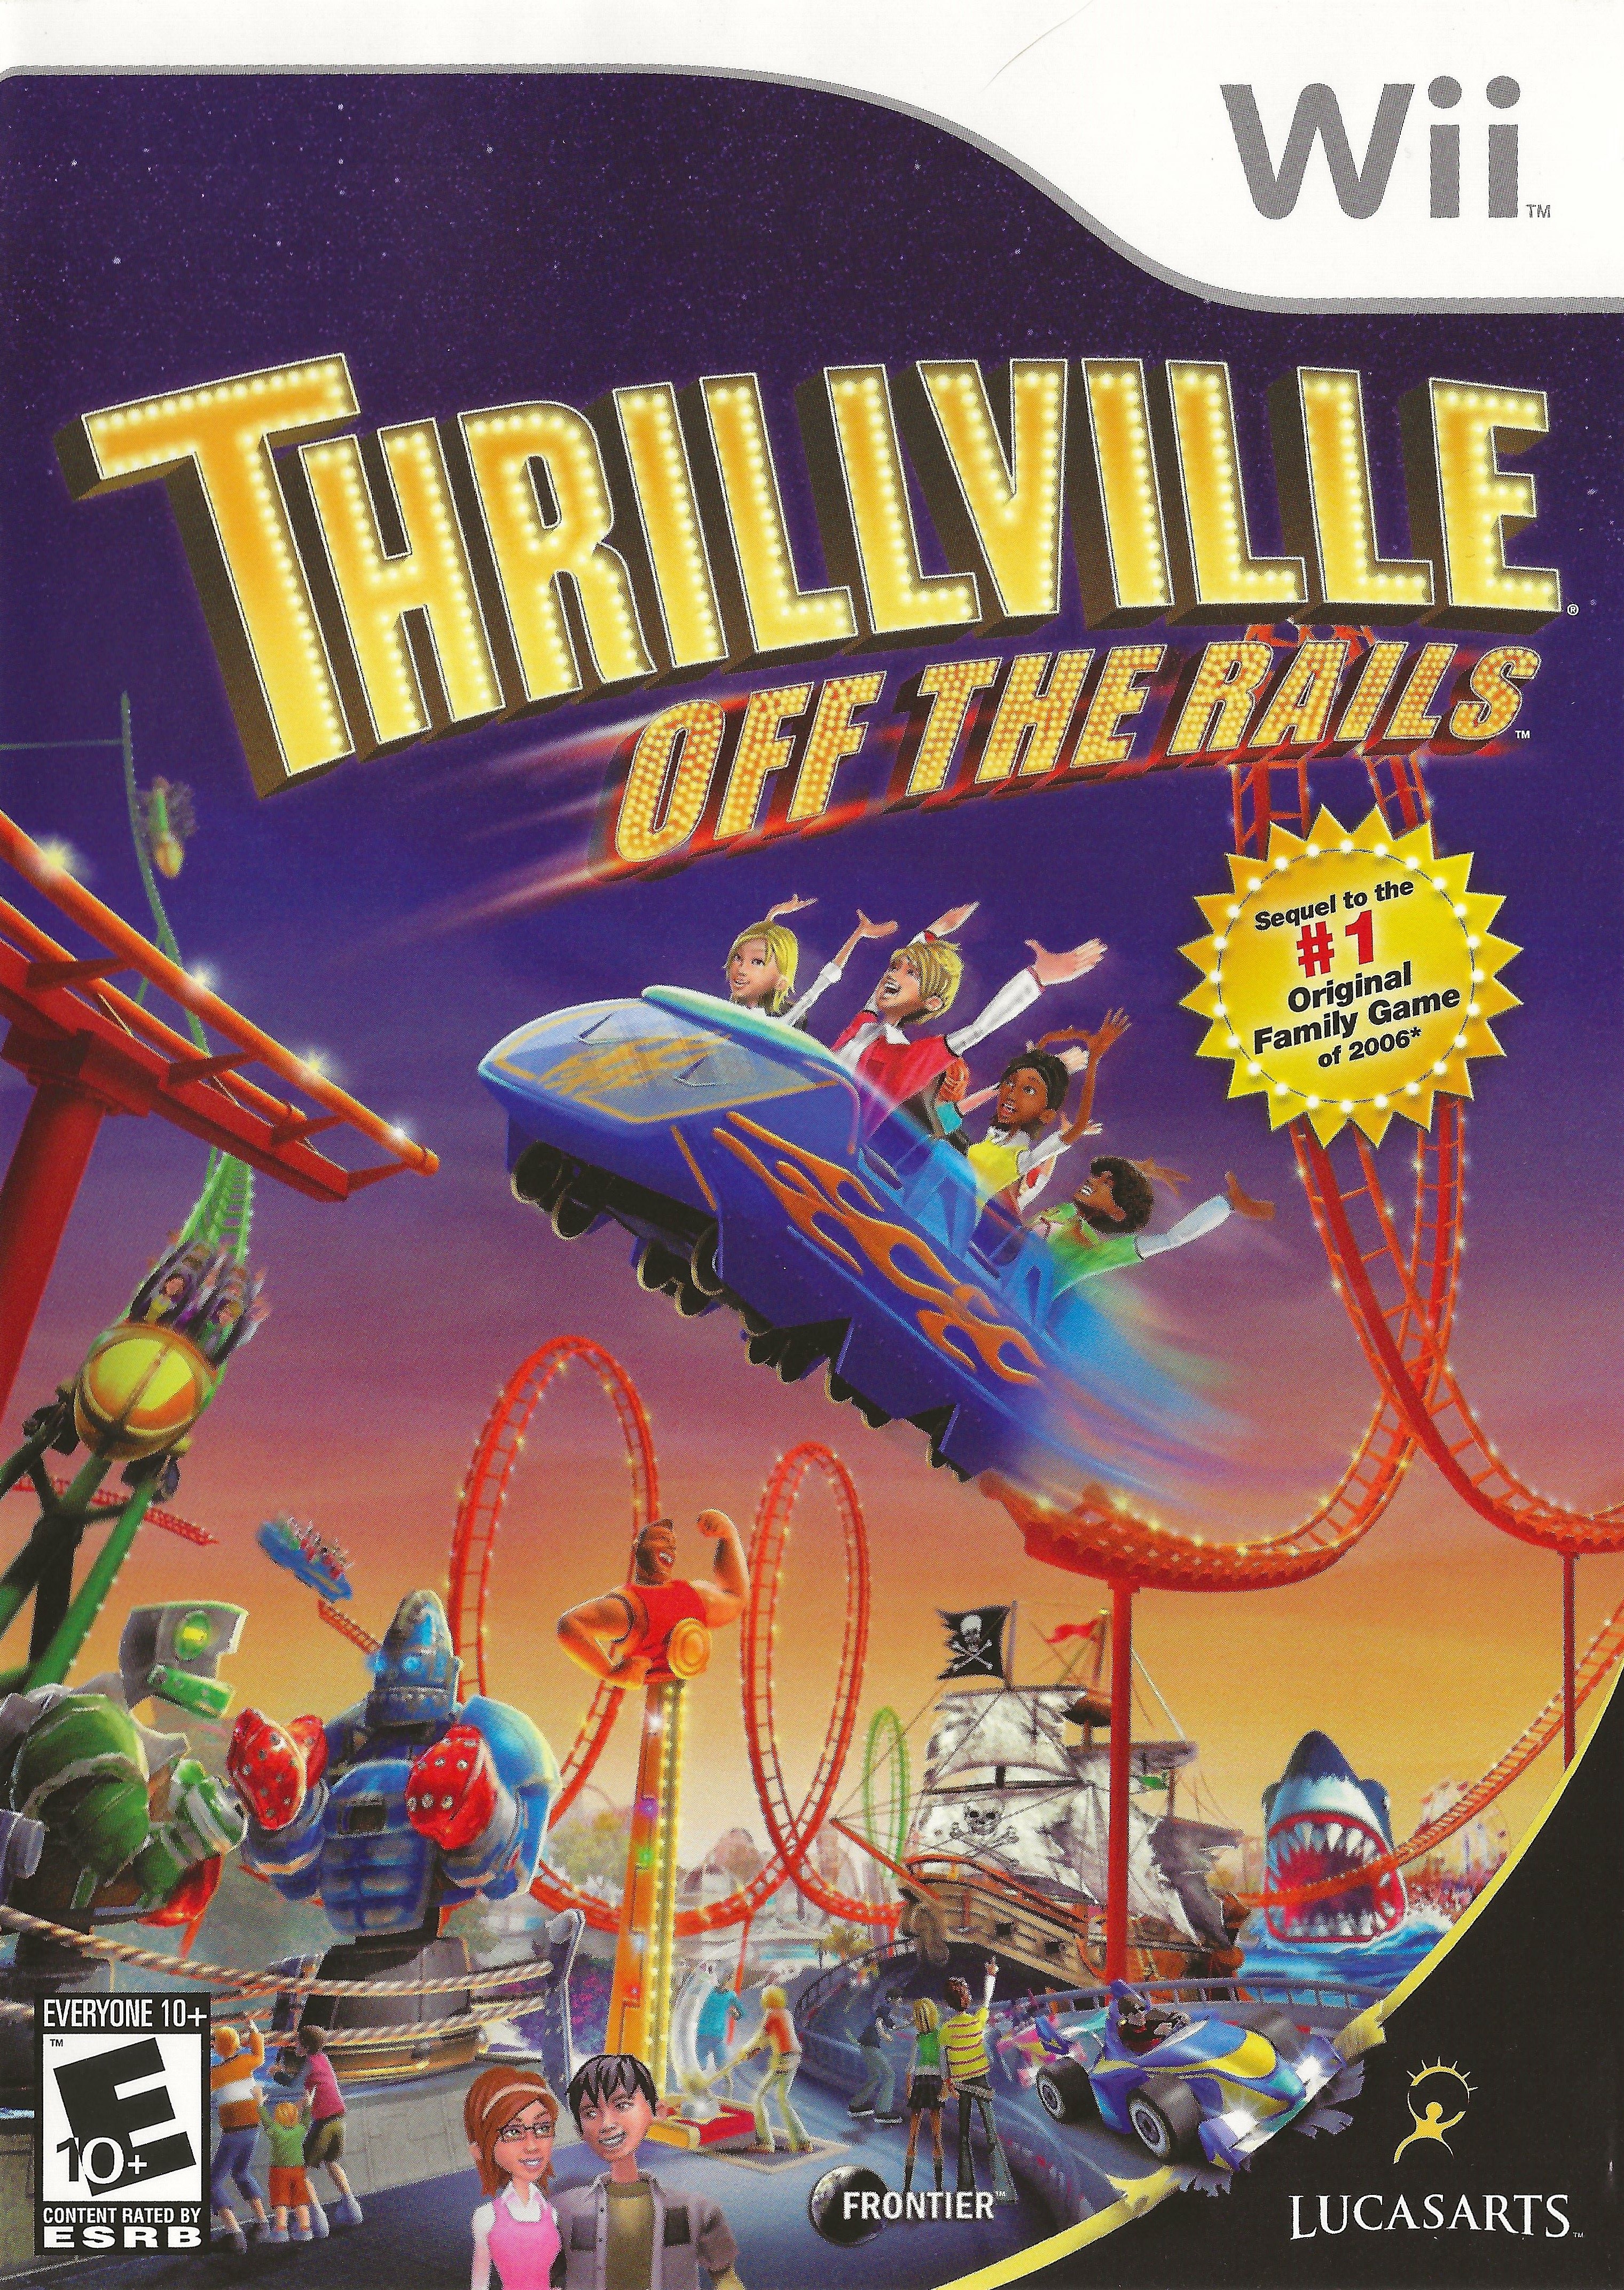 'ThrillVille: Off the Rails'